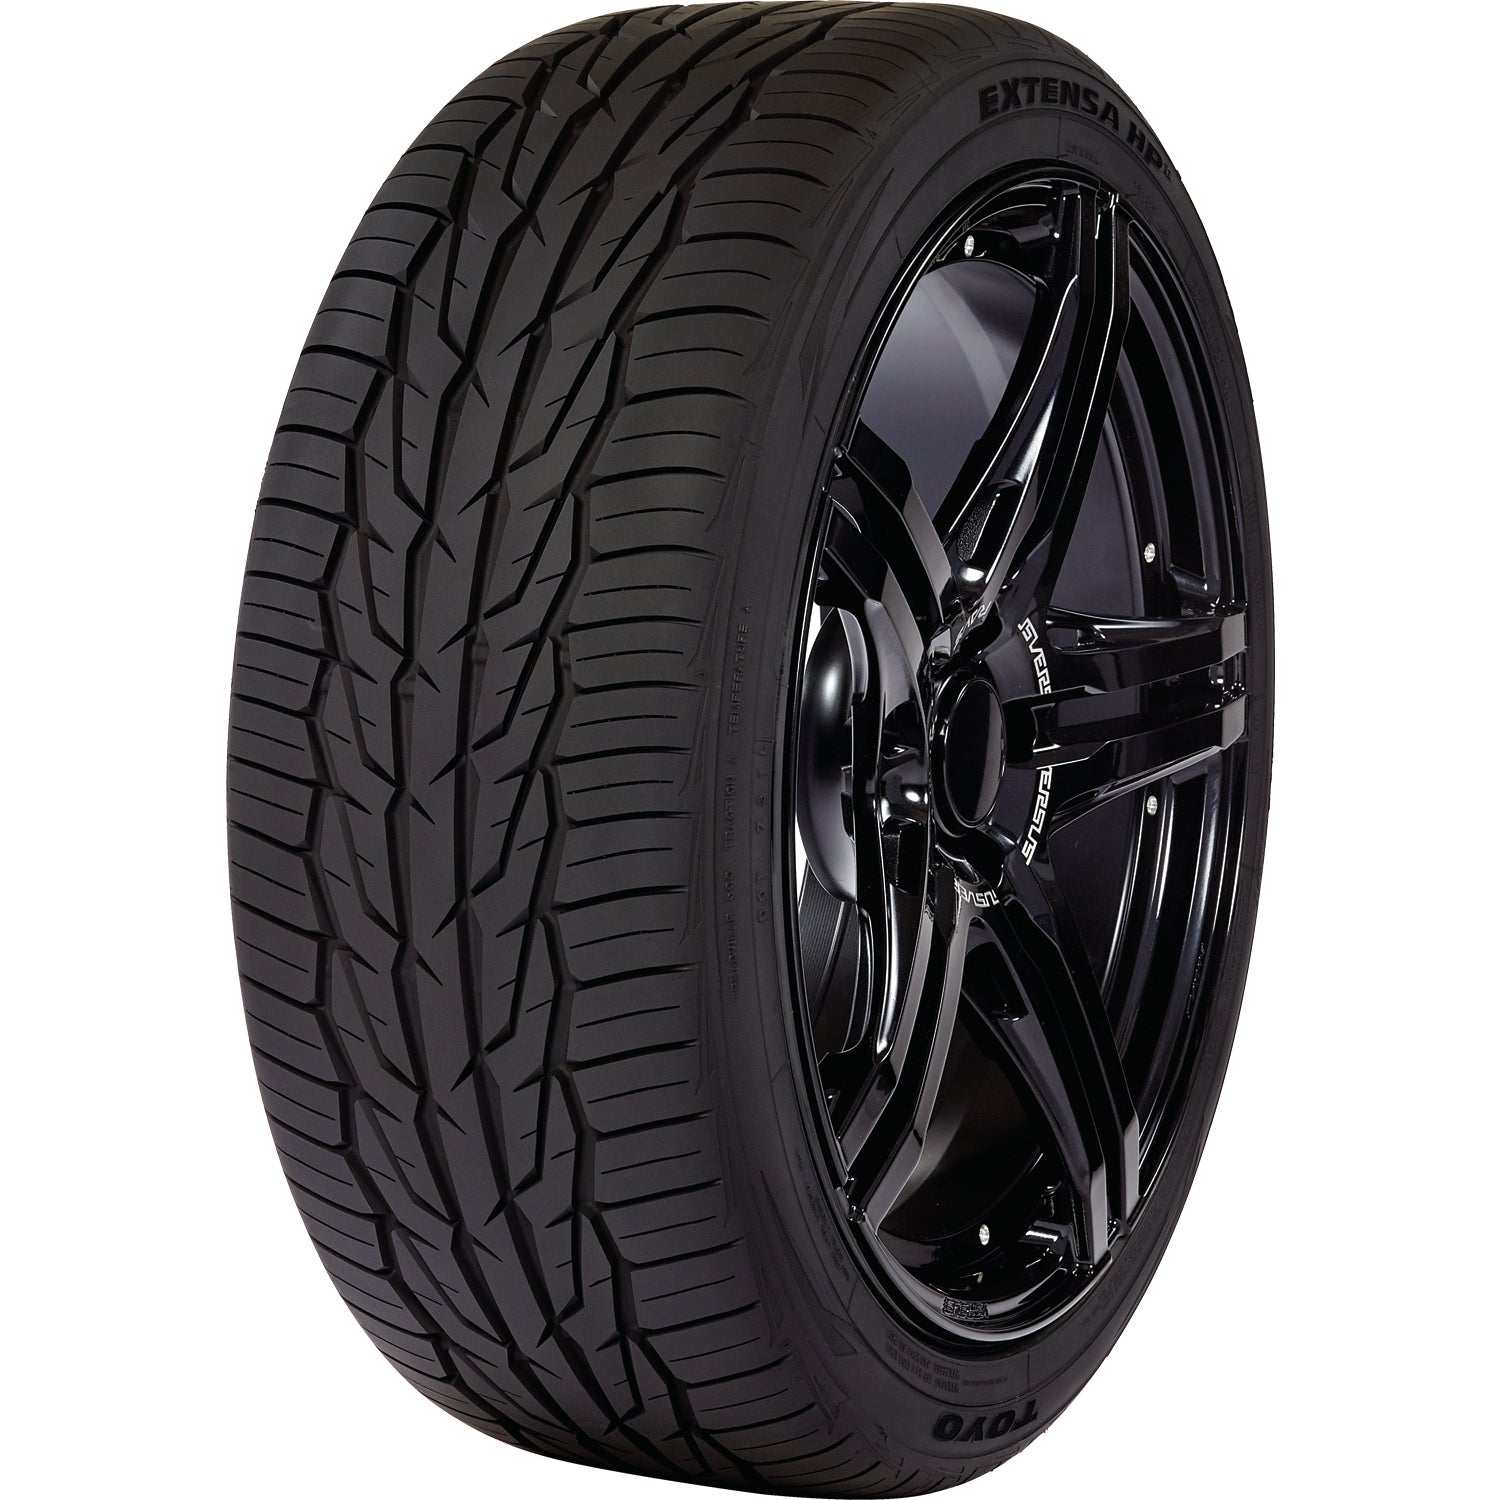 TOYO TIRES EXTENSA HP II 215/55R17 (26.3X8.9R 17) Tires